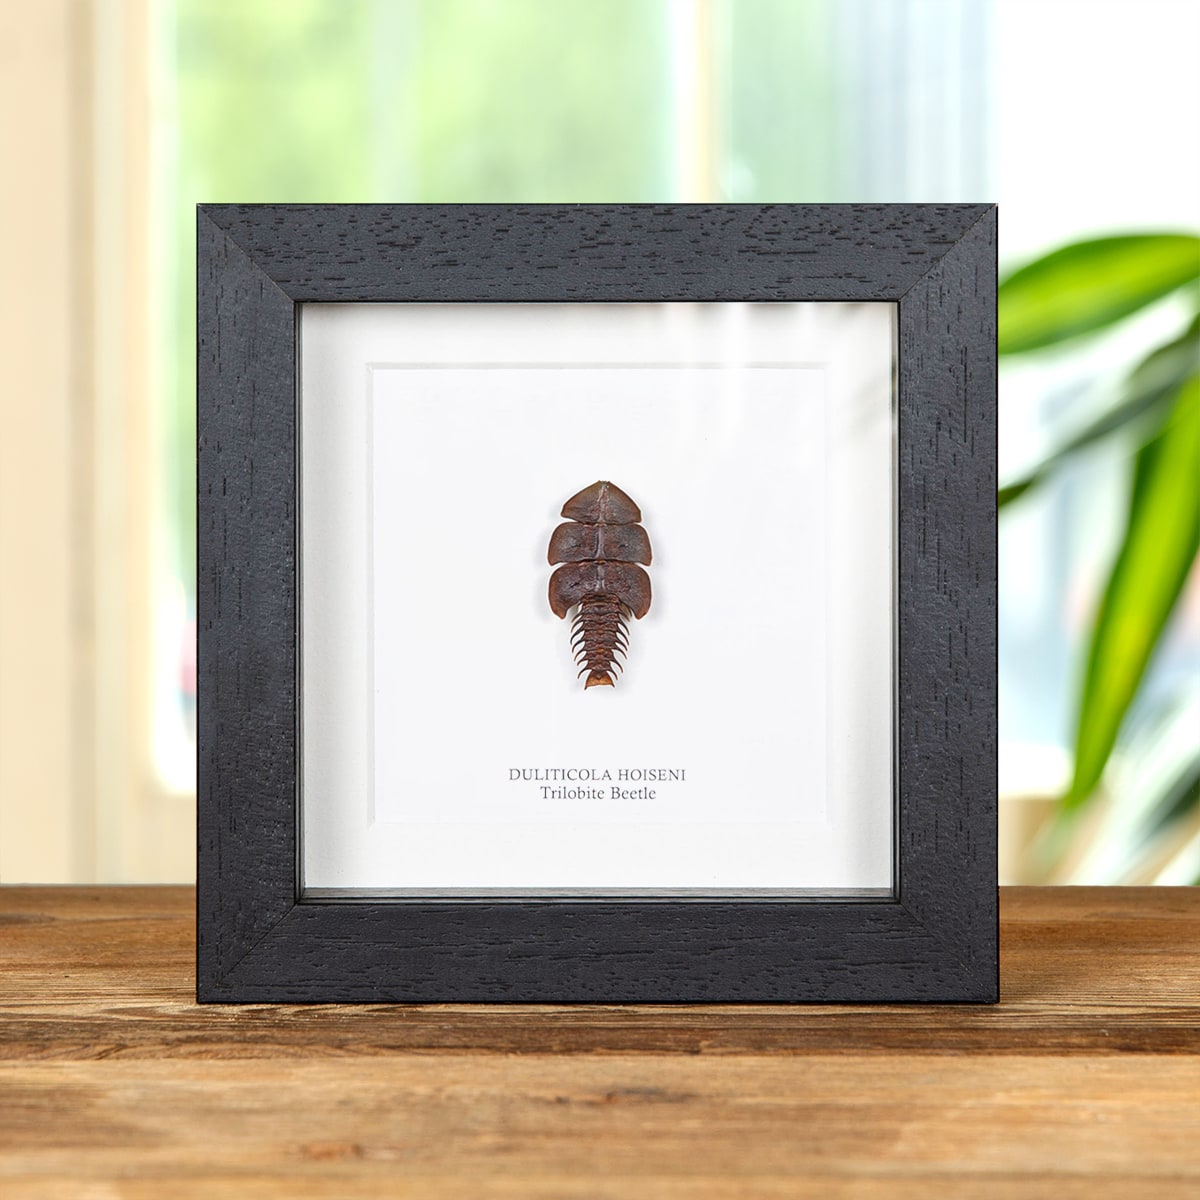 Minibeast Trilobite Beetle in Box Frame (Duliticola hoiseni)